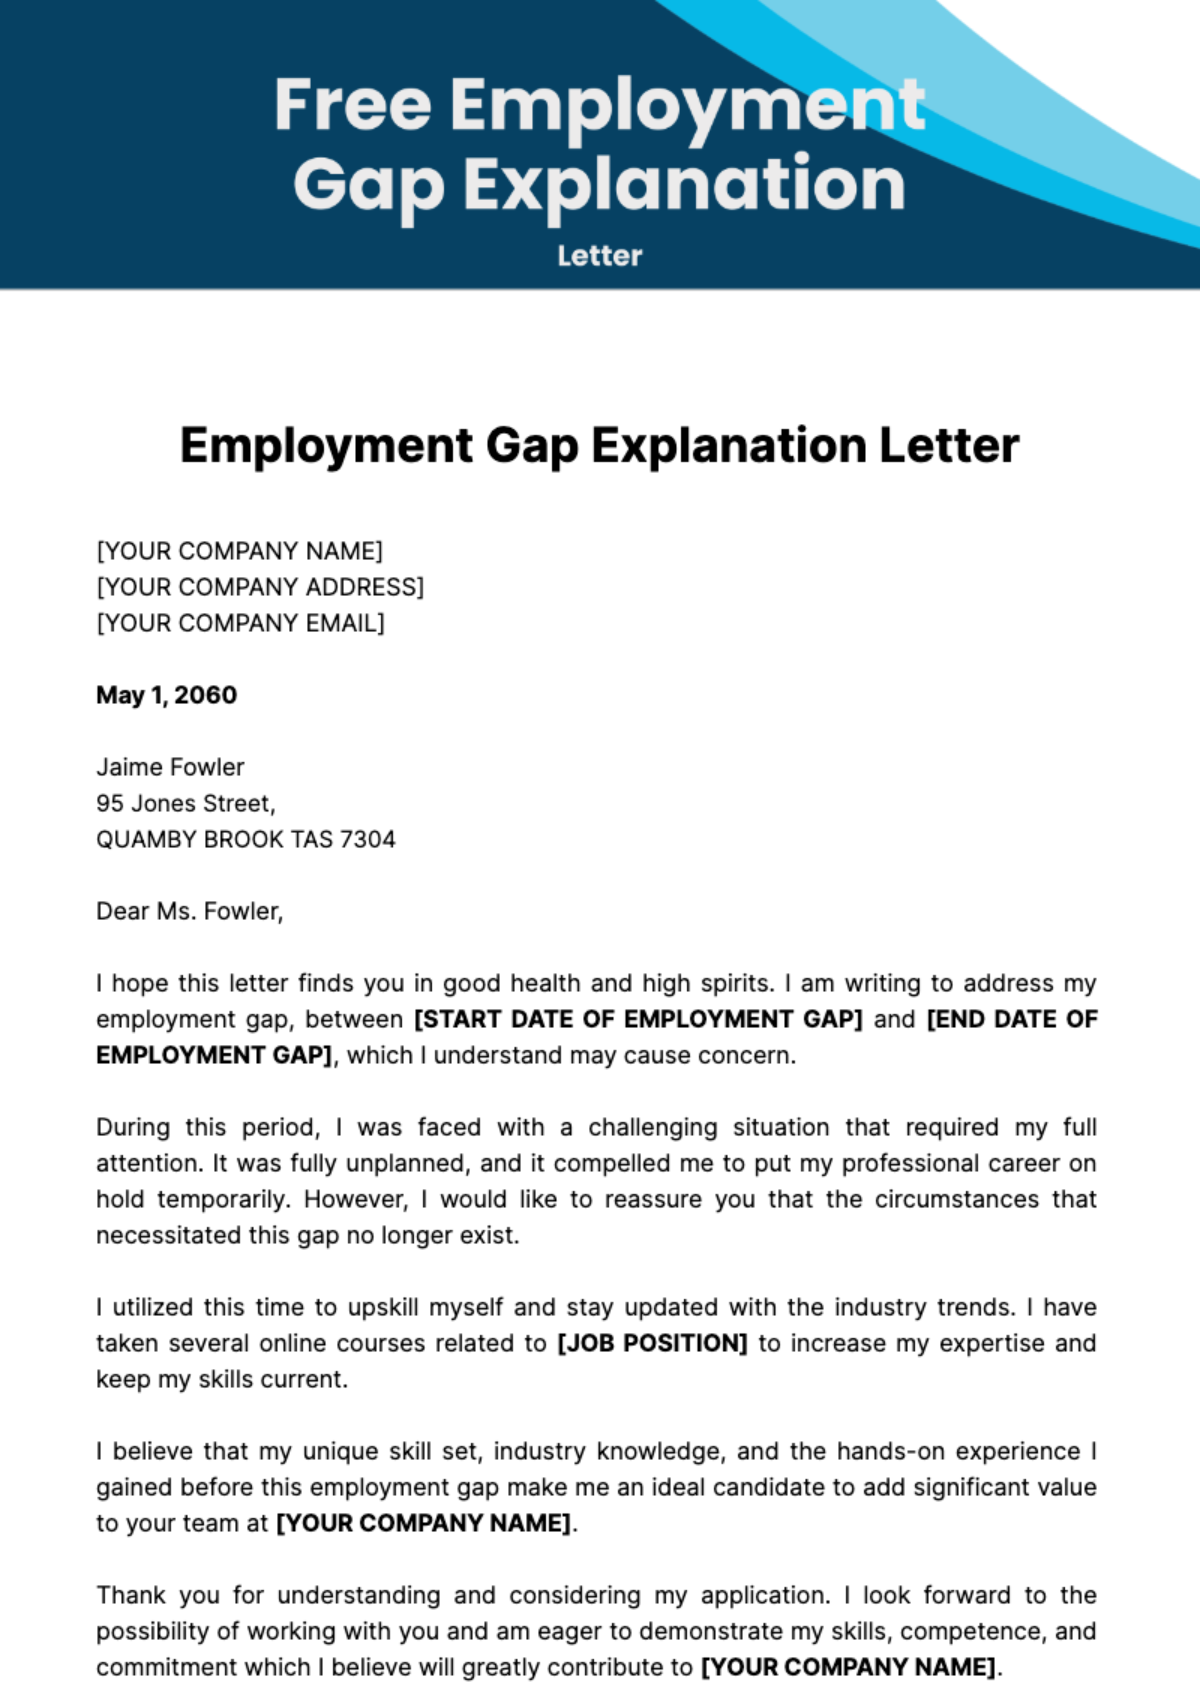 Employment Gap Explanation Letter Template